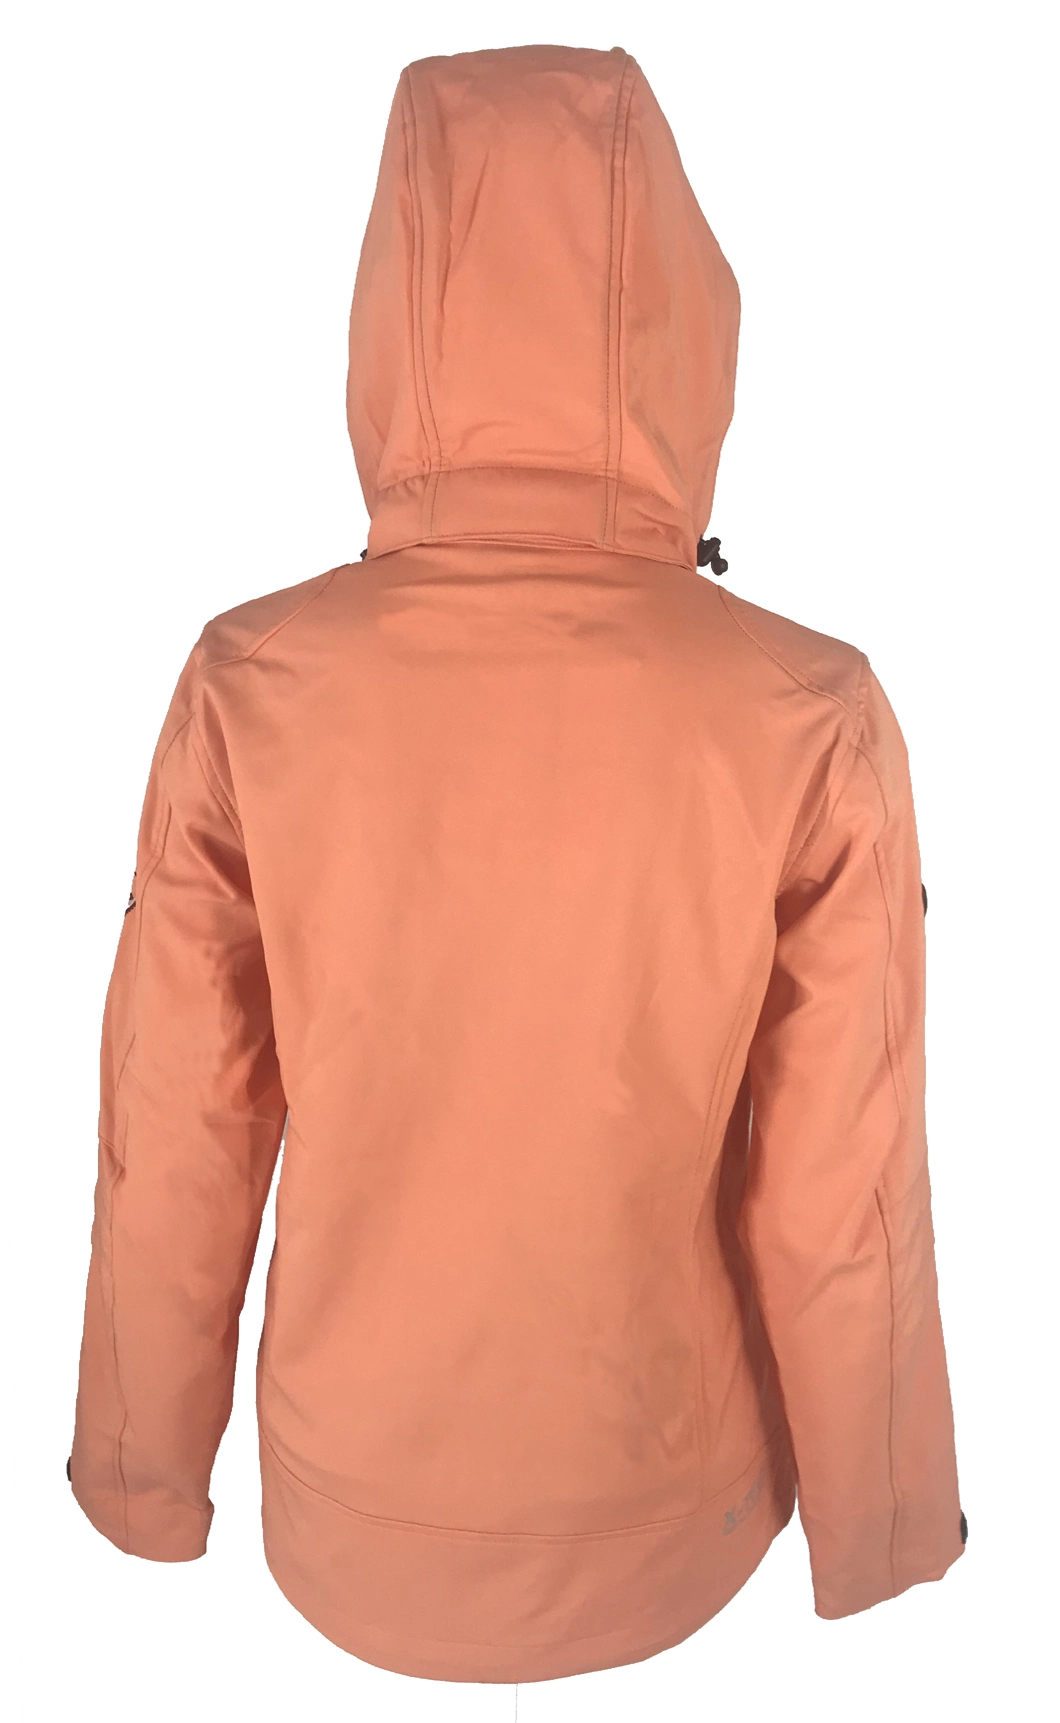 Lady's Waterproof/ Breathable/ Windproof Softshell Jacket with Adjustment Hood